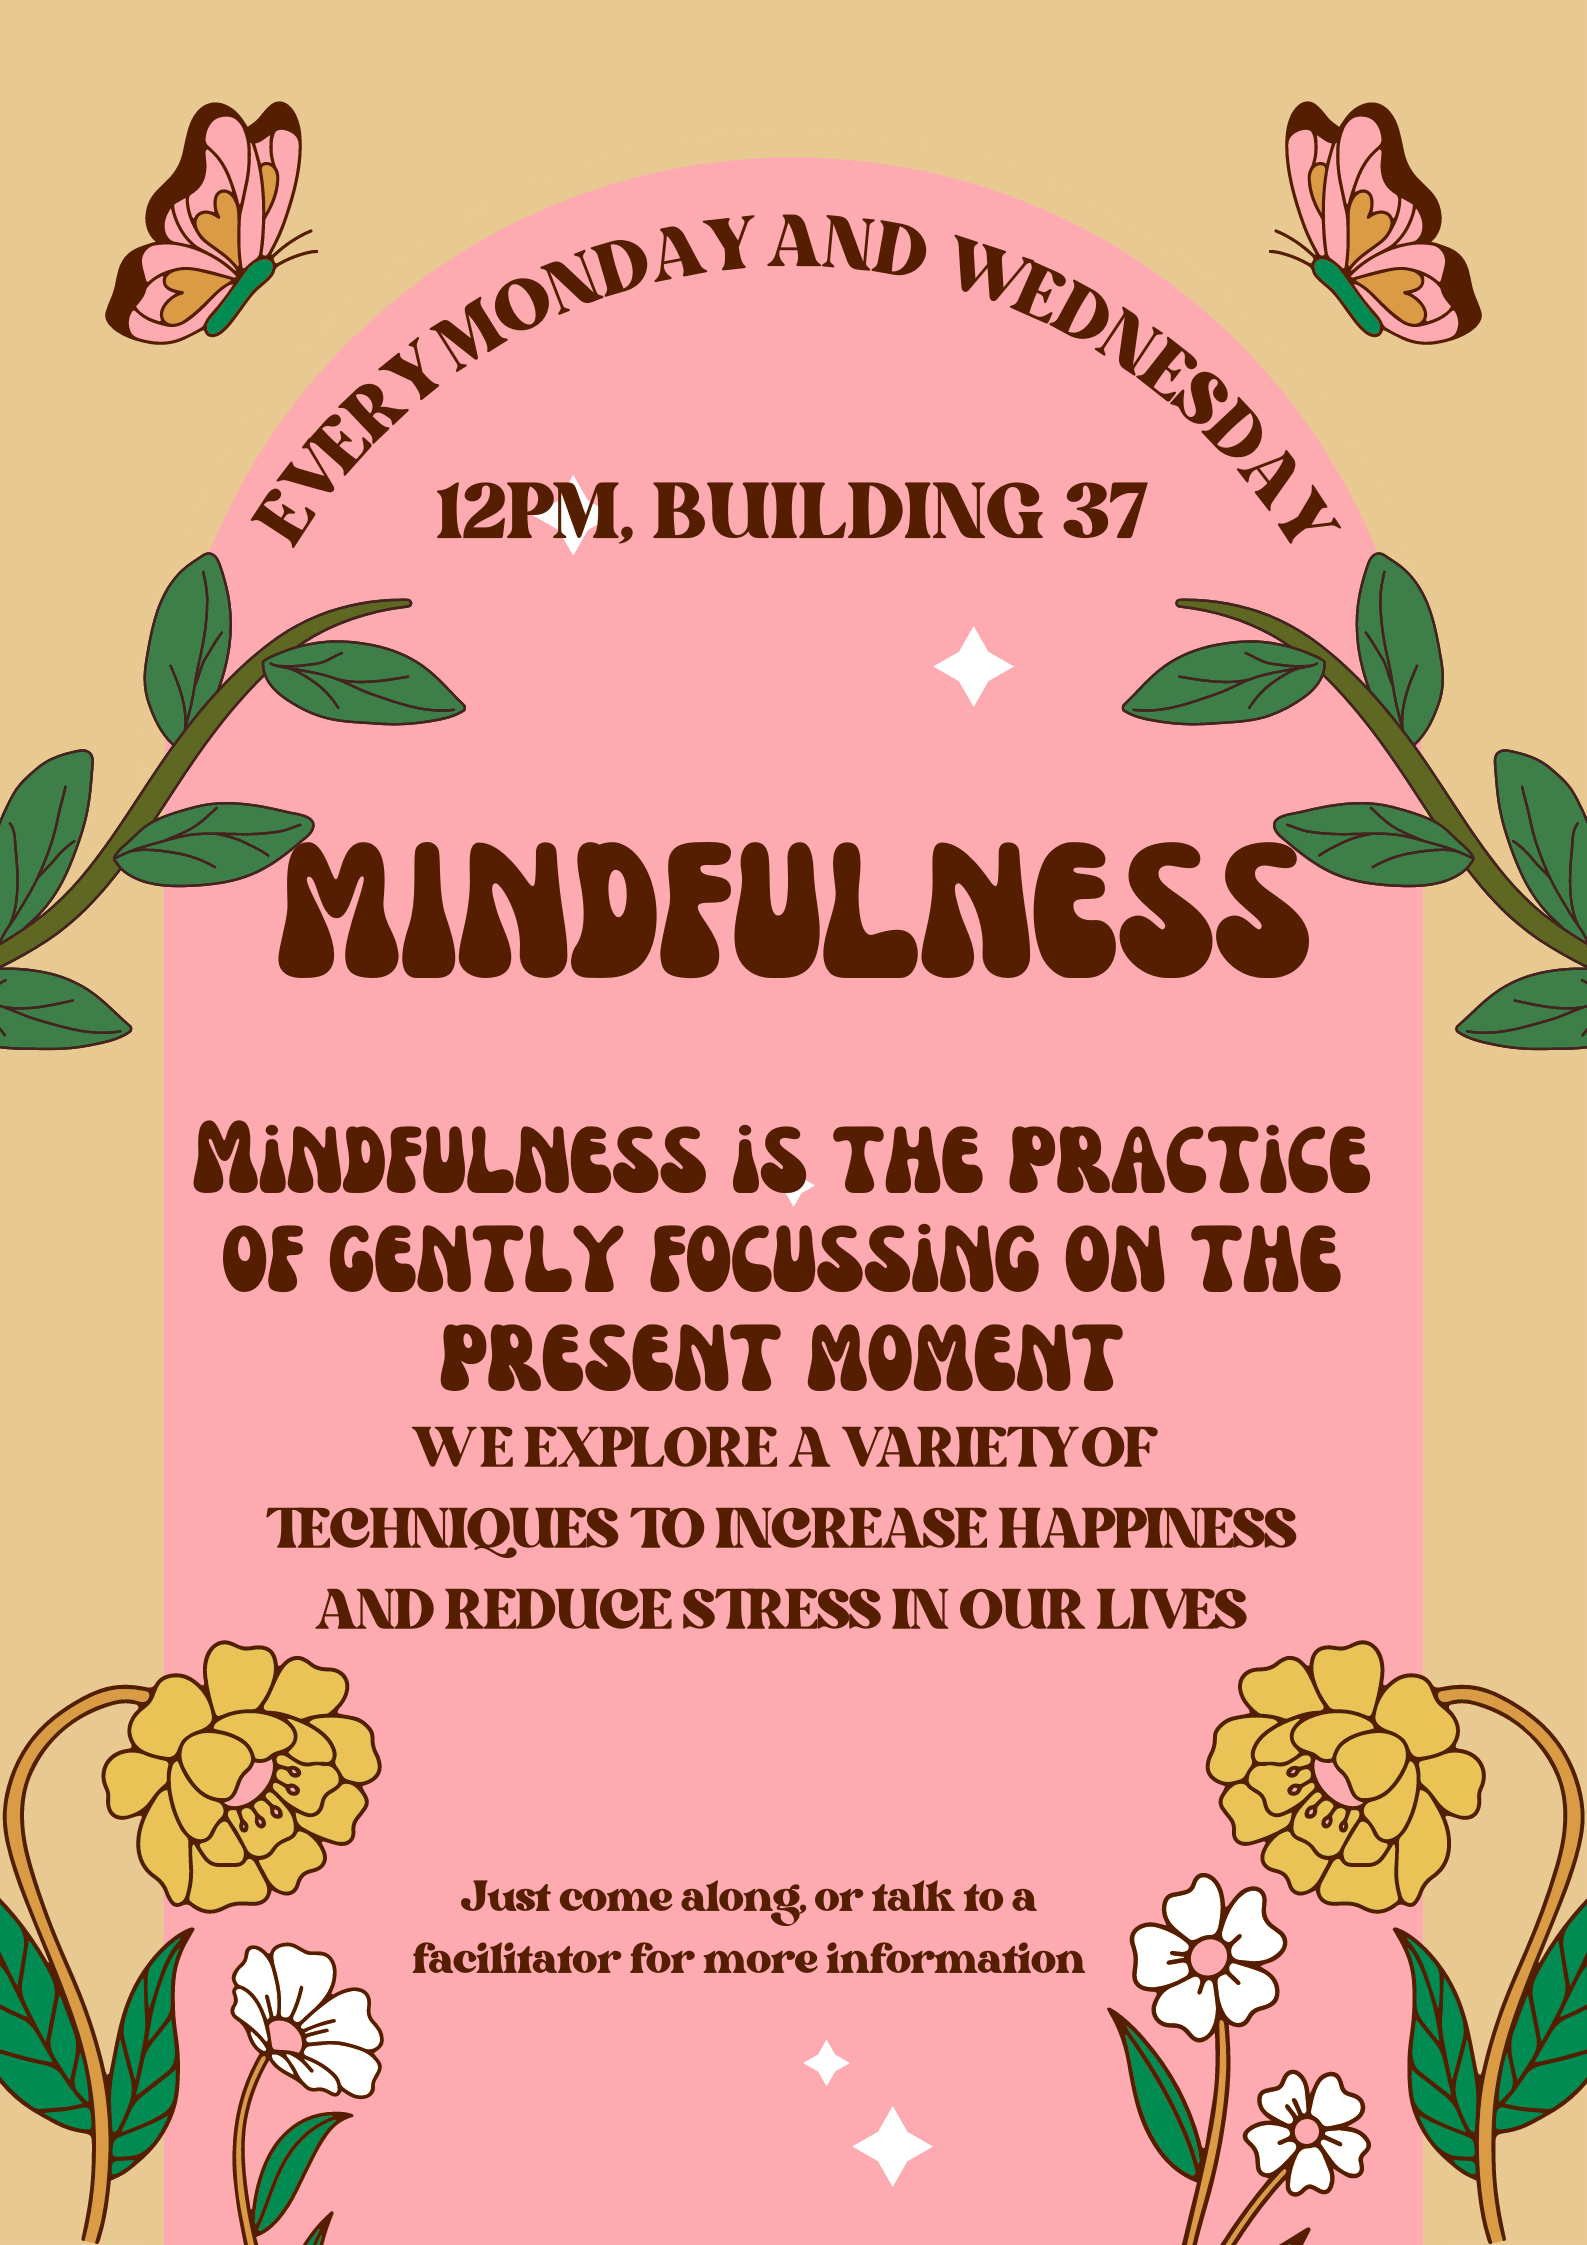 Mindfulness - Every Monday and Wednesday